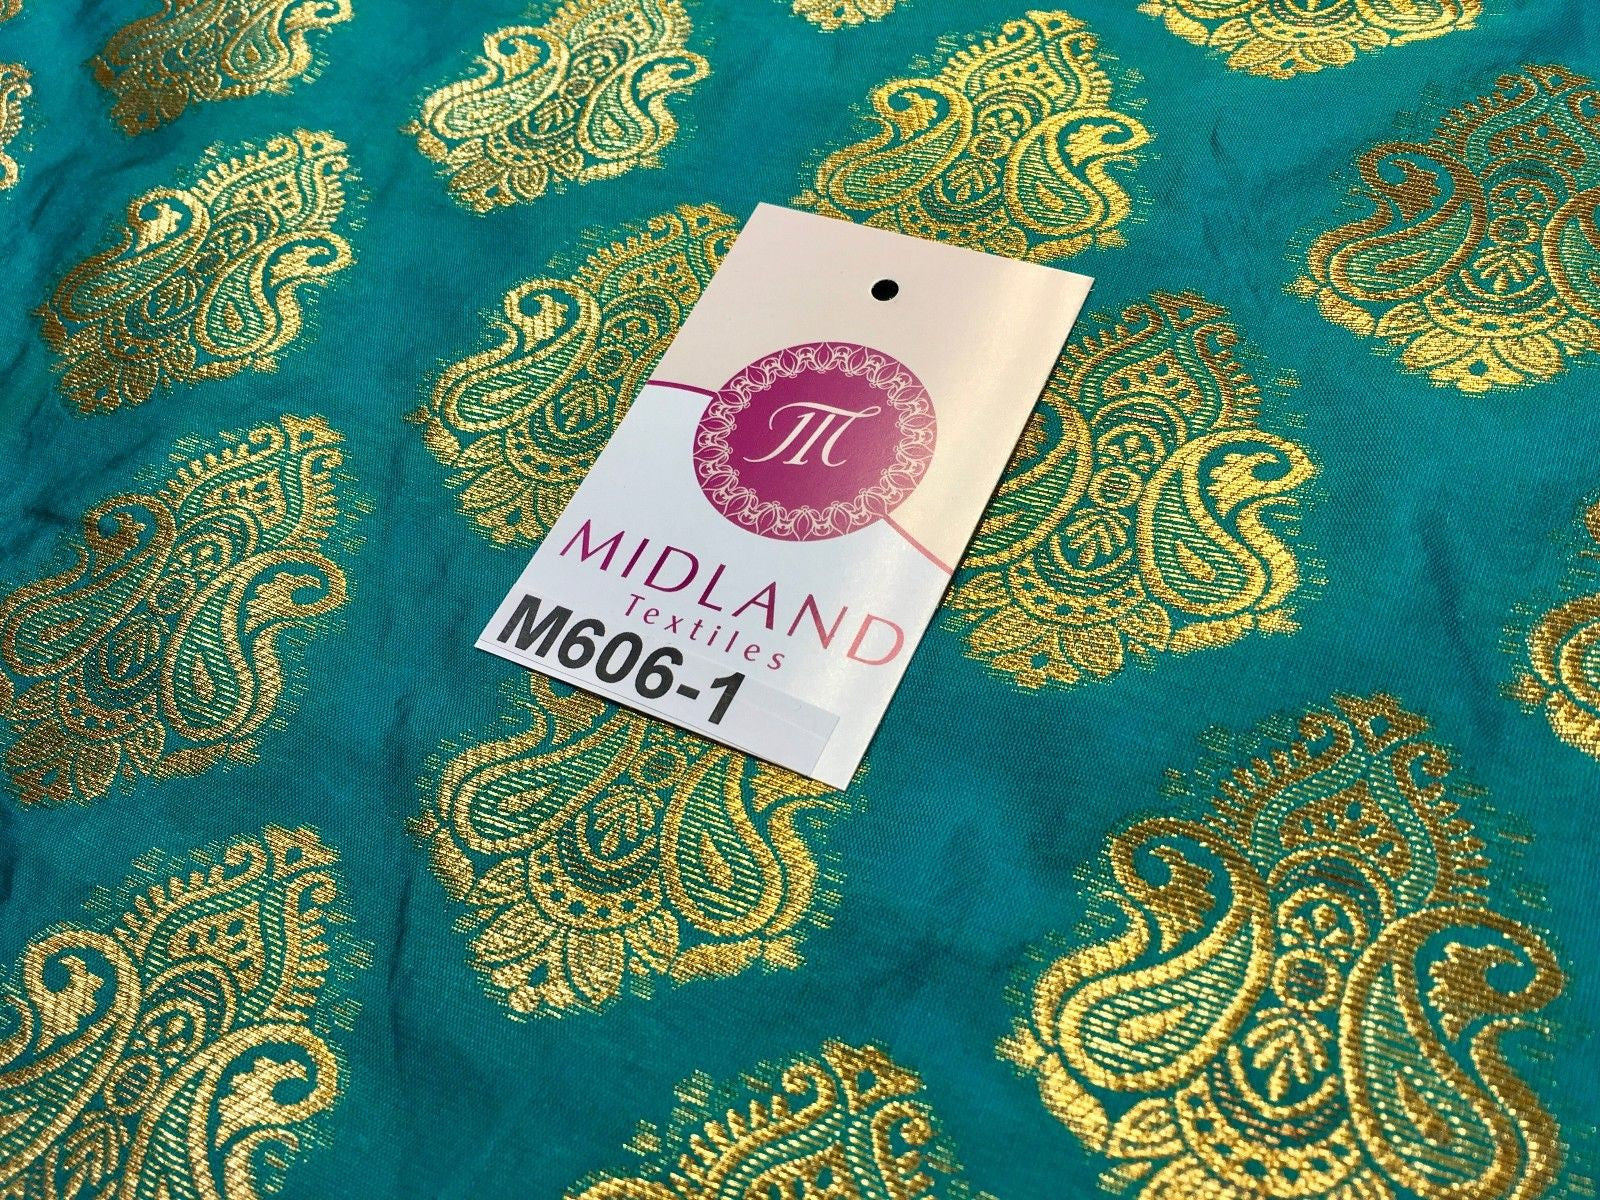 Indian Paisley Ornamental Metallic faux silk banarsi Brocade 44" Wide M606 - Midland Textiles & Fabric